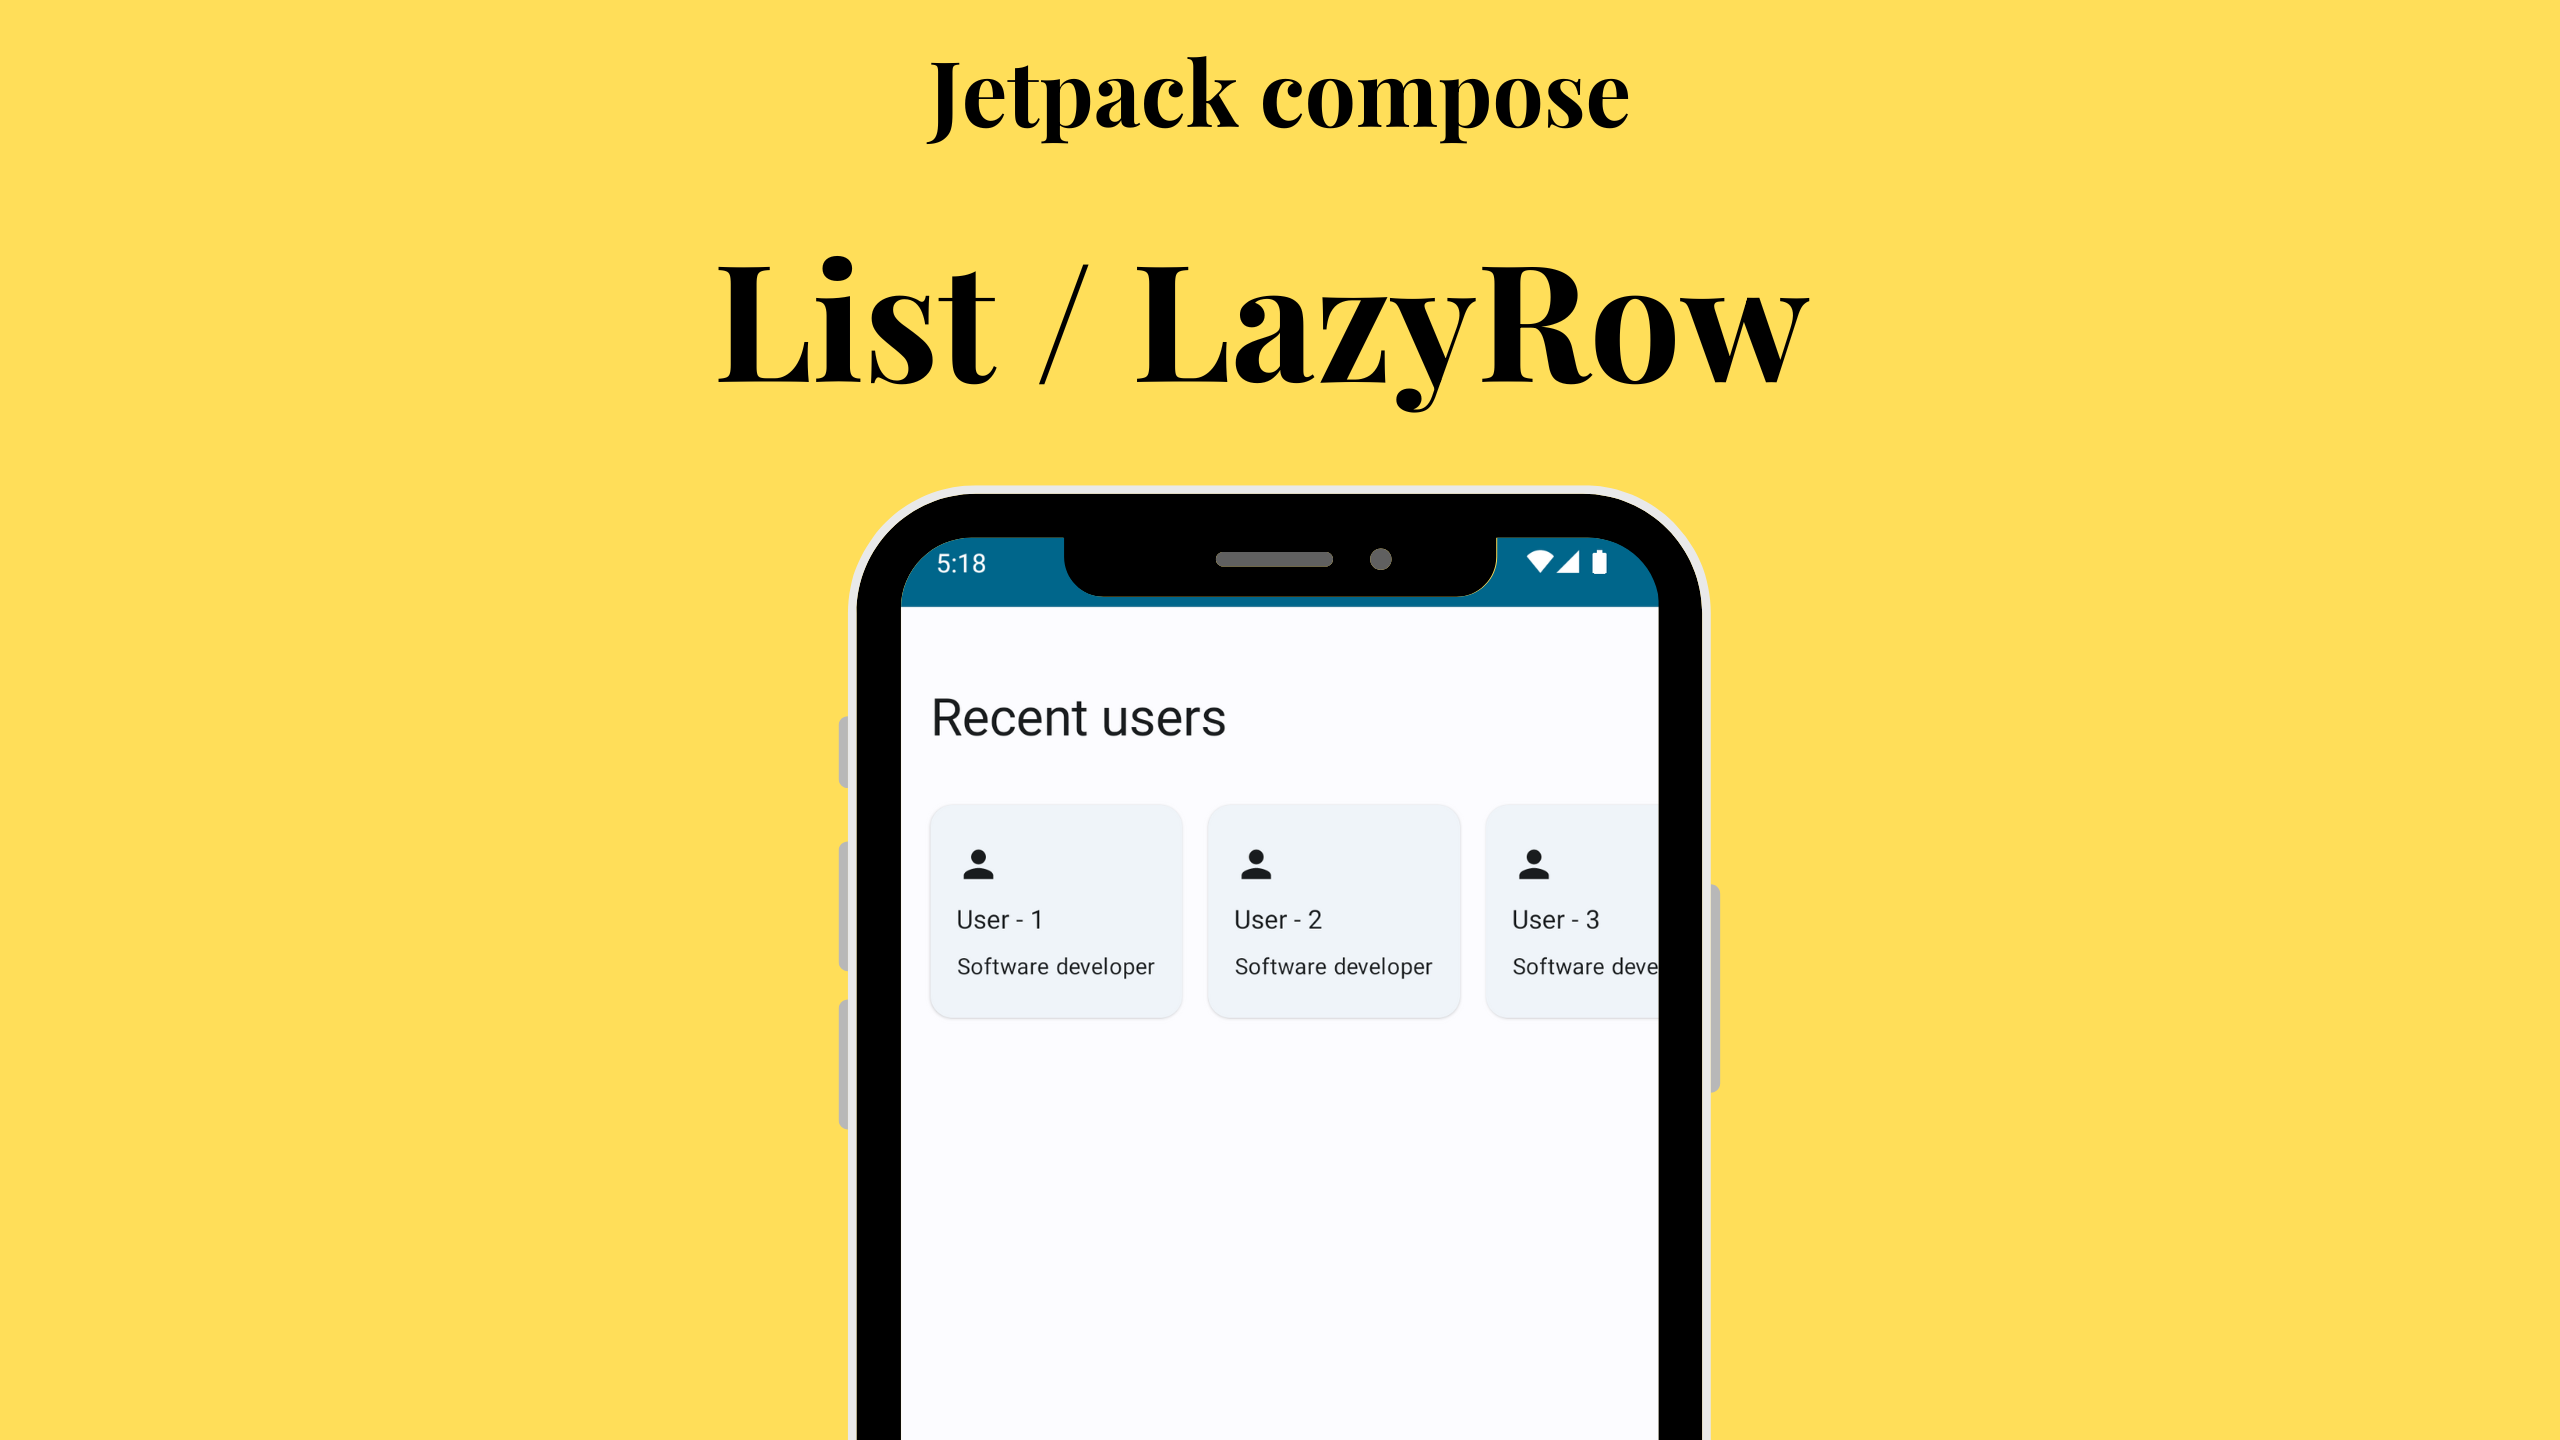 Jetpack compose : List / LazyRow